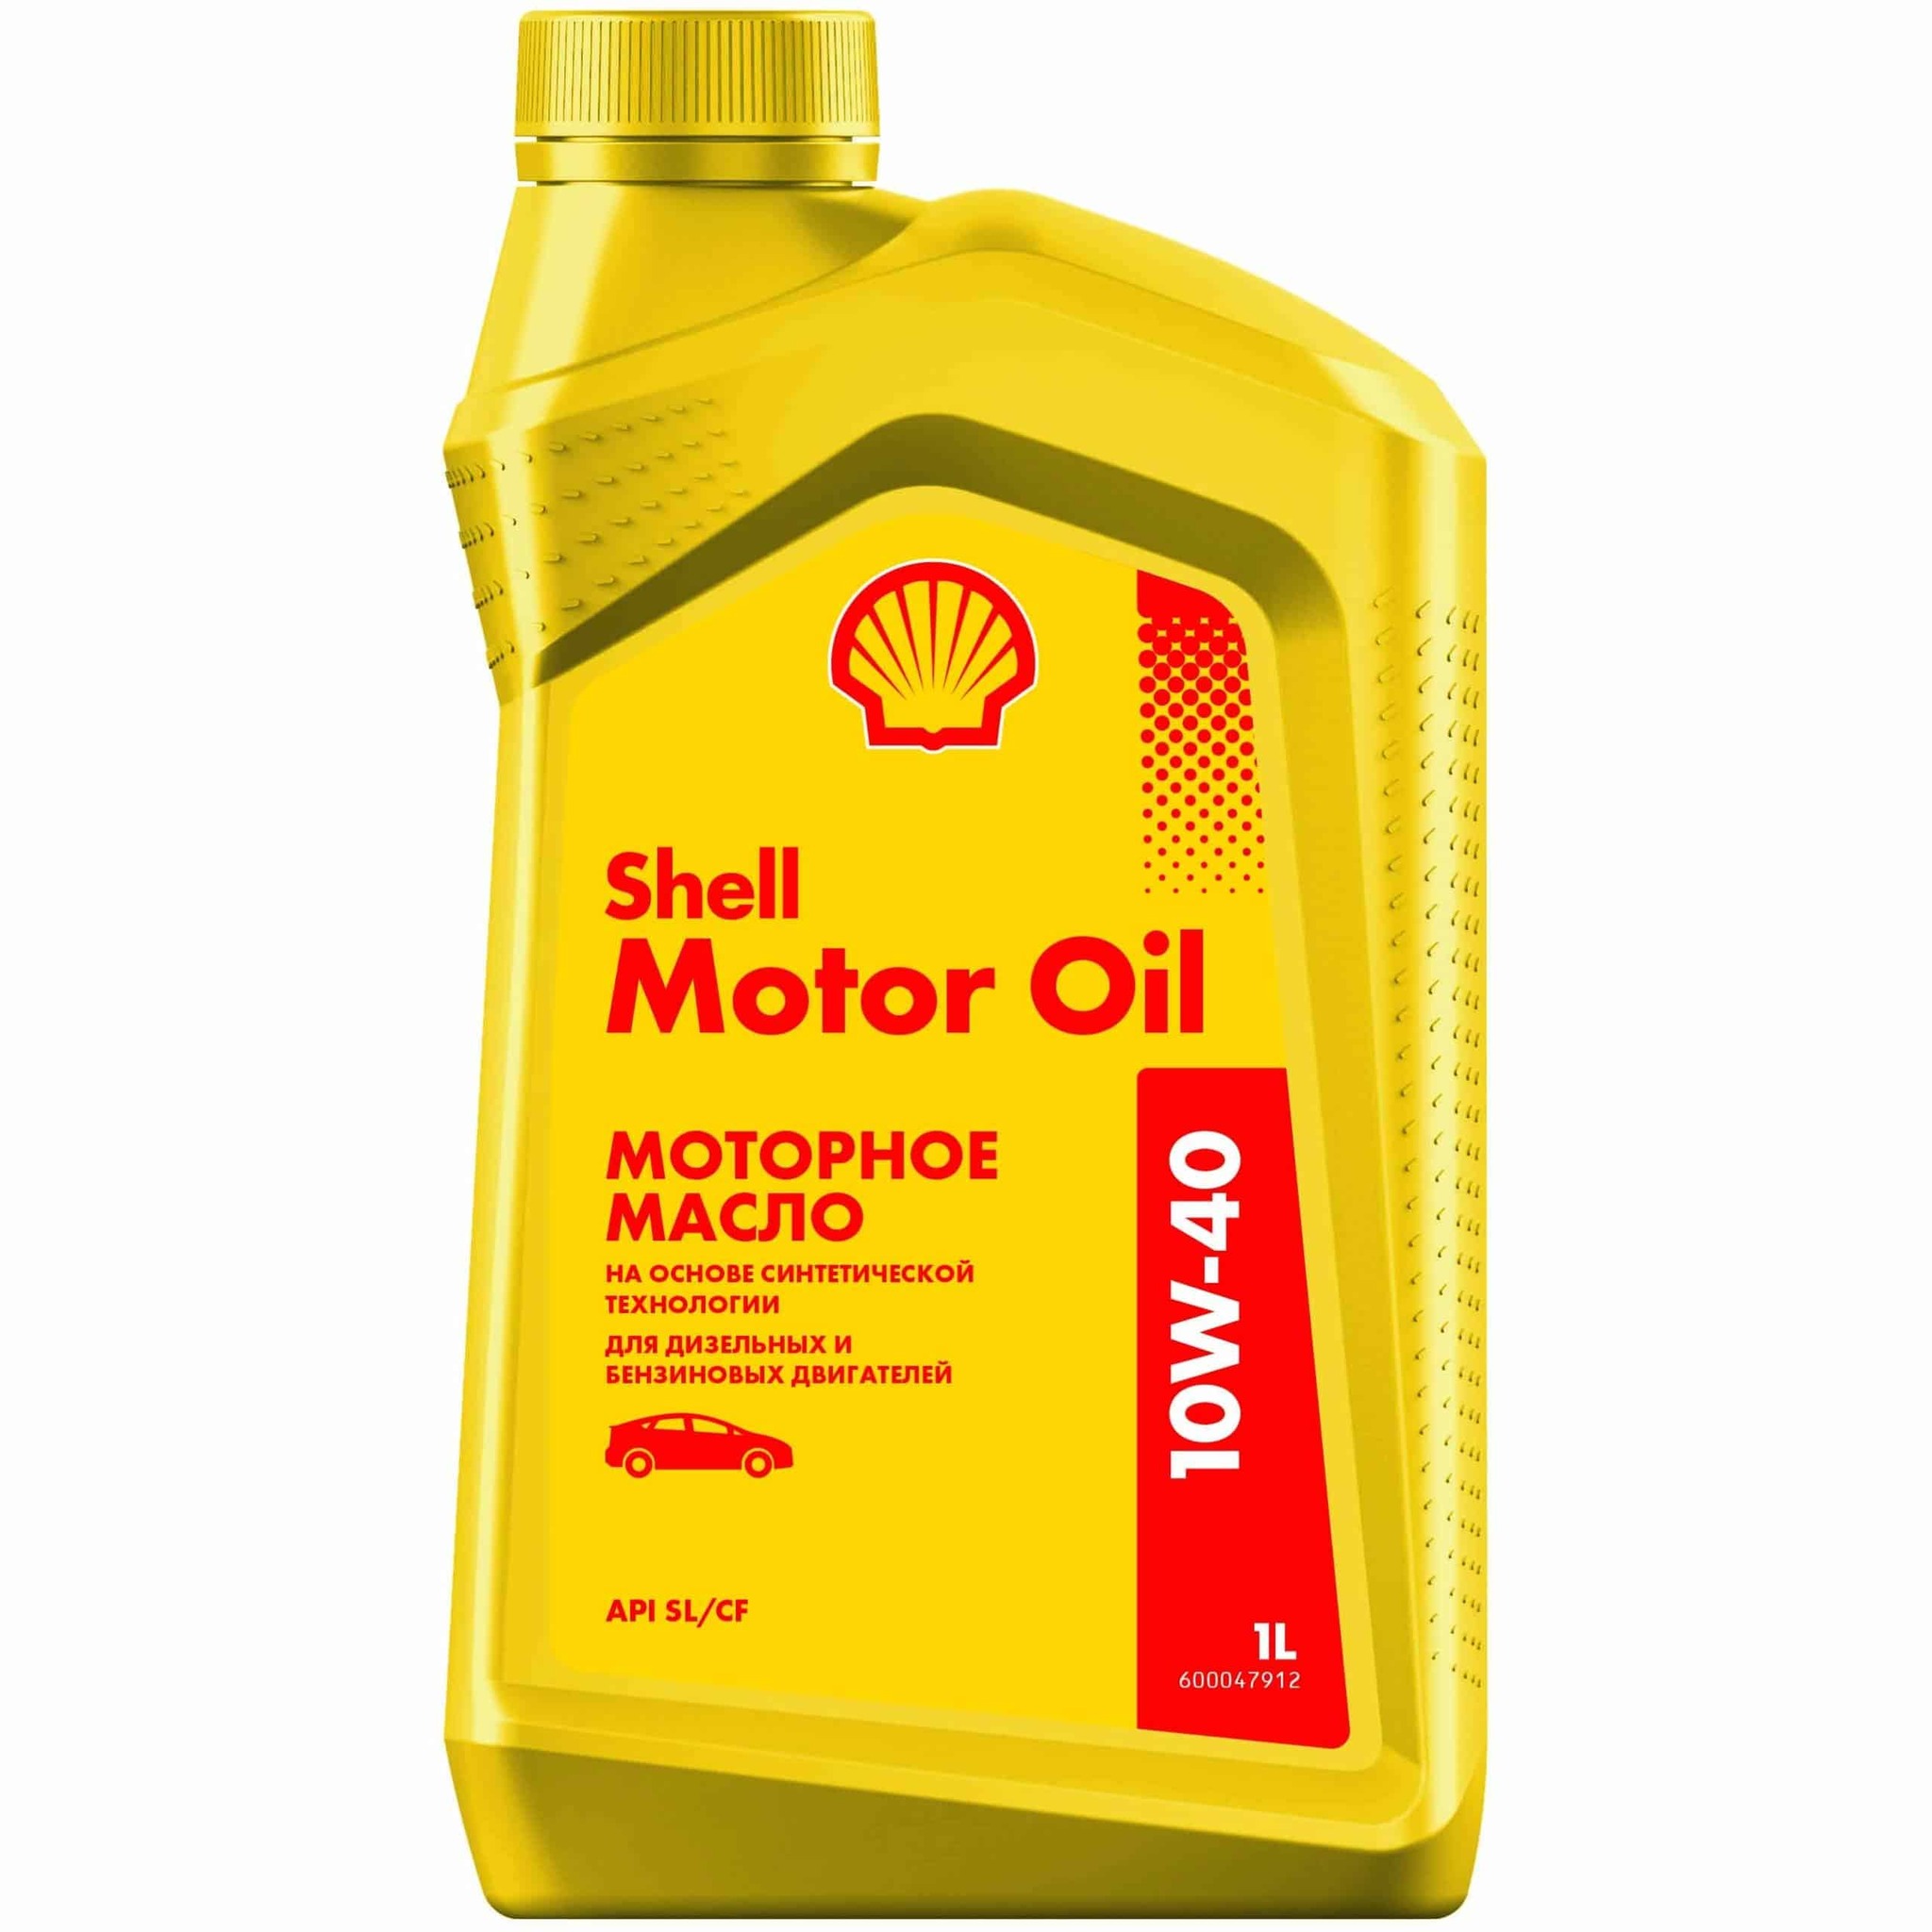 Shell Motor Oil 10W40 Масло моторное полусинтетическое